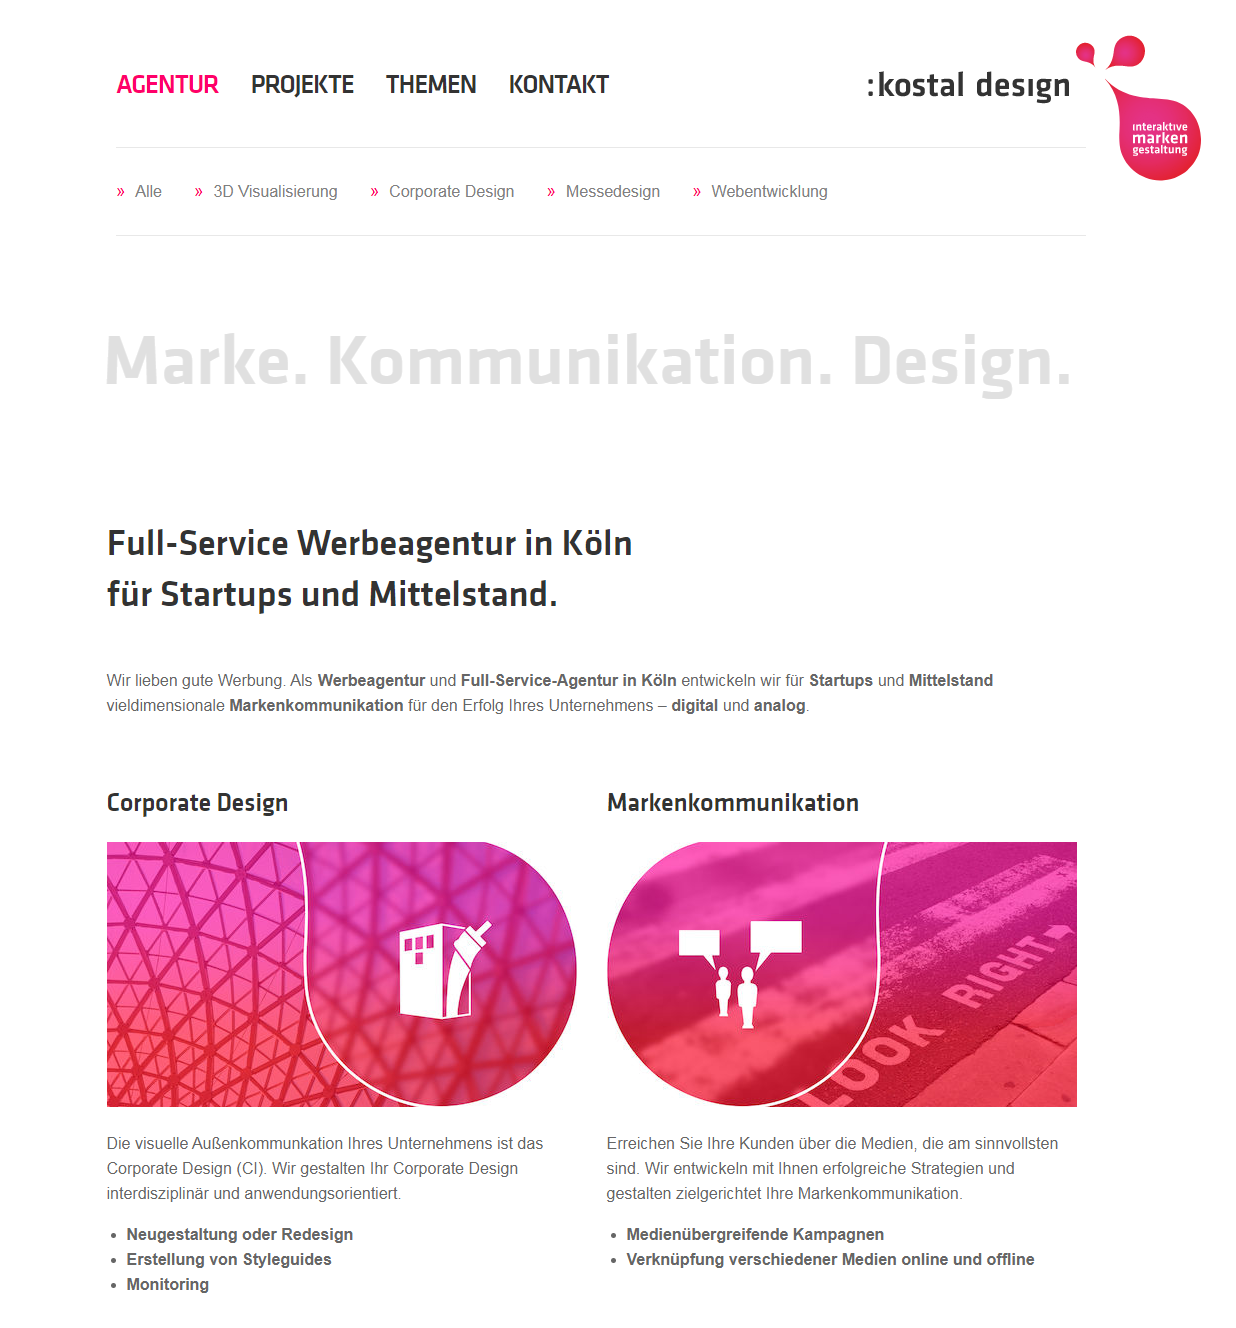 :kostal design – advertising agency